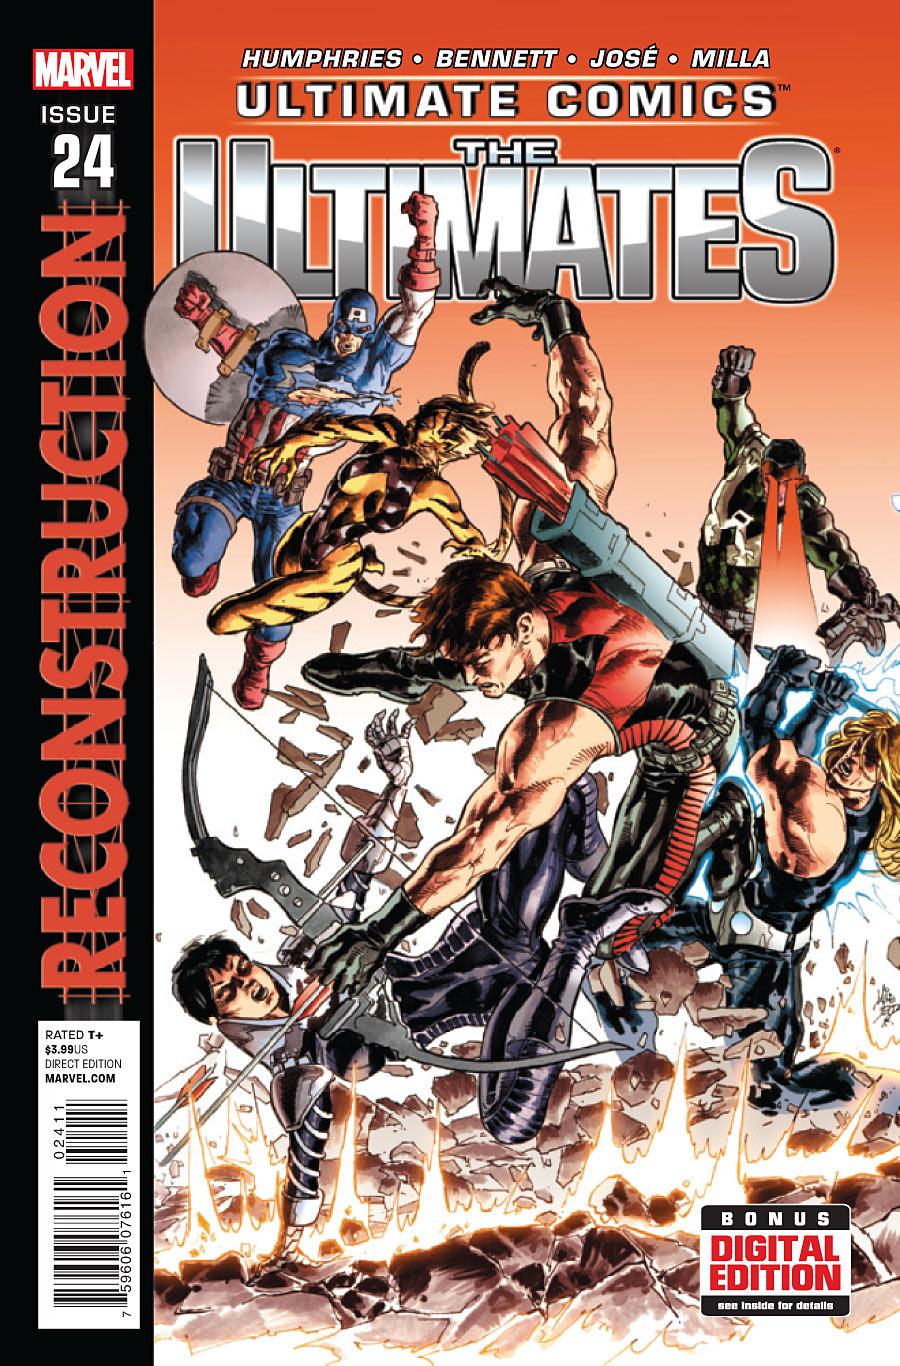 Ultimate Comics Ultimates Vol. 1 #24